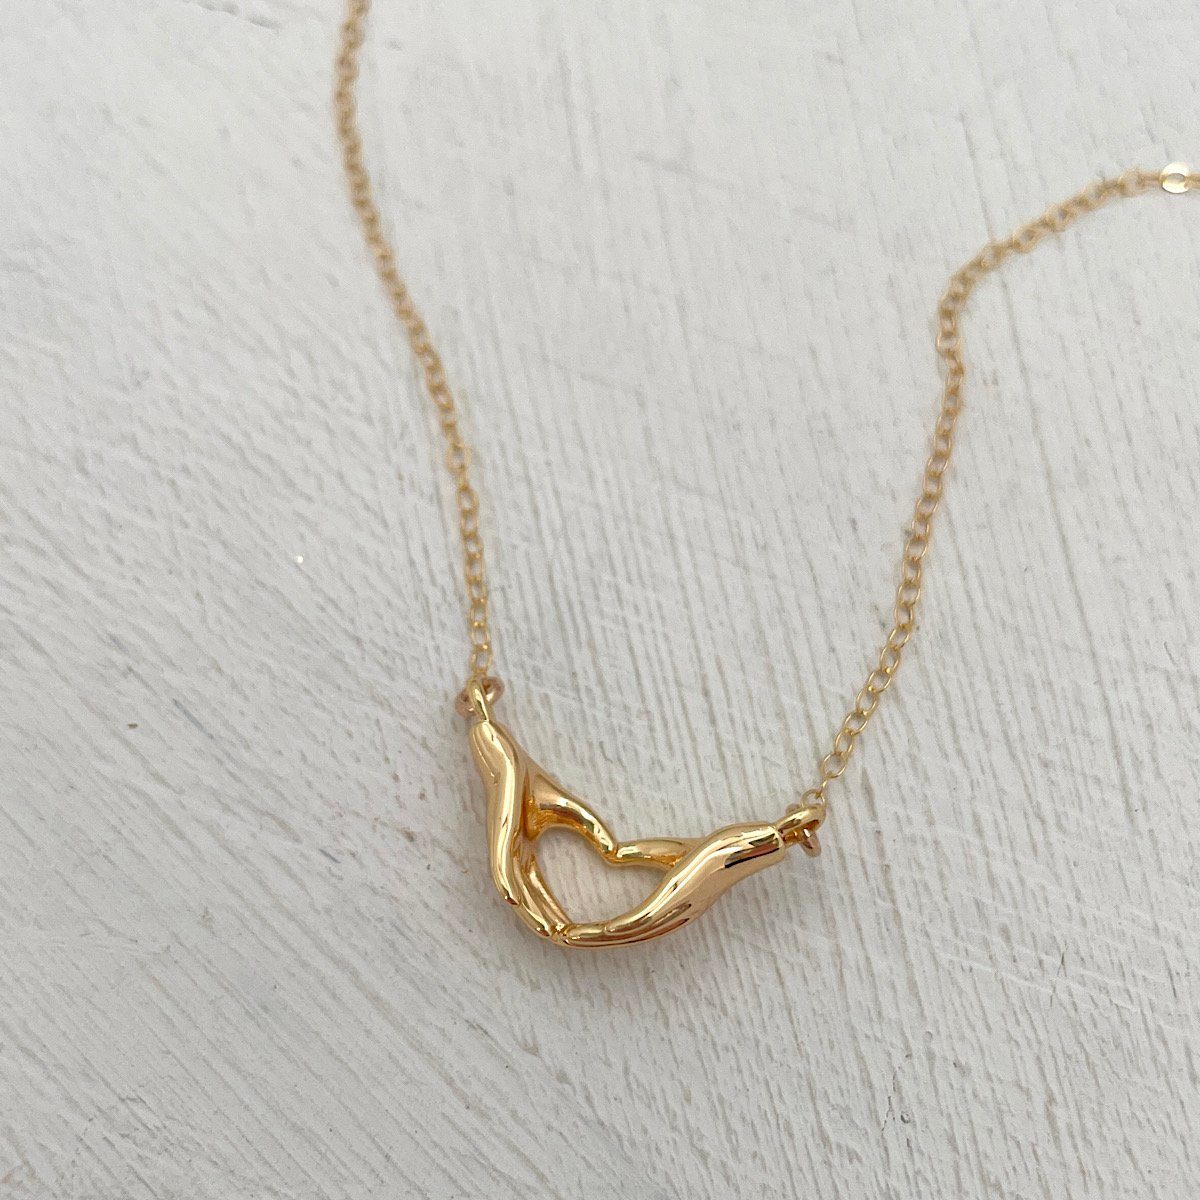 Oberon Design Fearless Heart Hand-Cast Britannia Metal Necklace